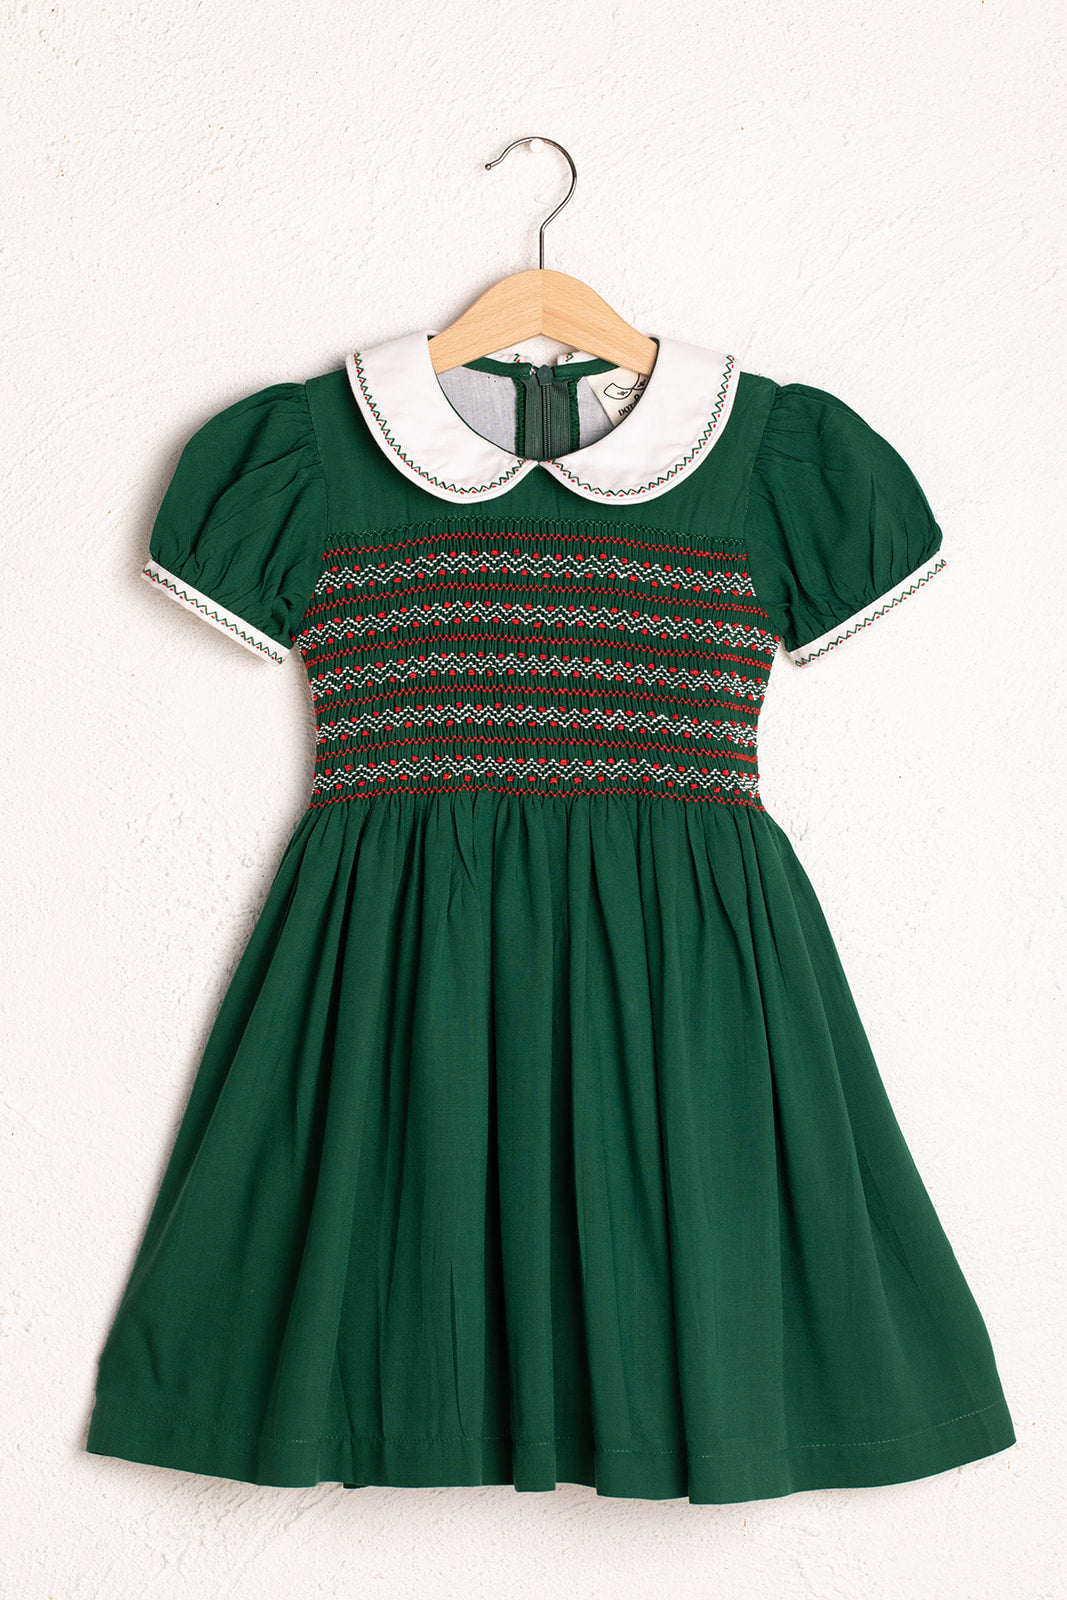 Dot & Mila Green Smocked Dress Size 5